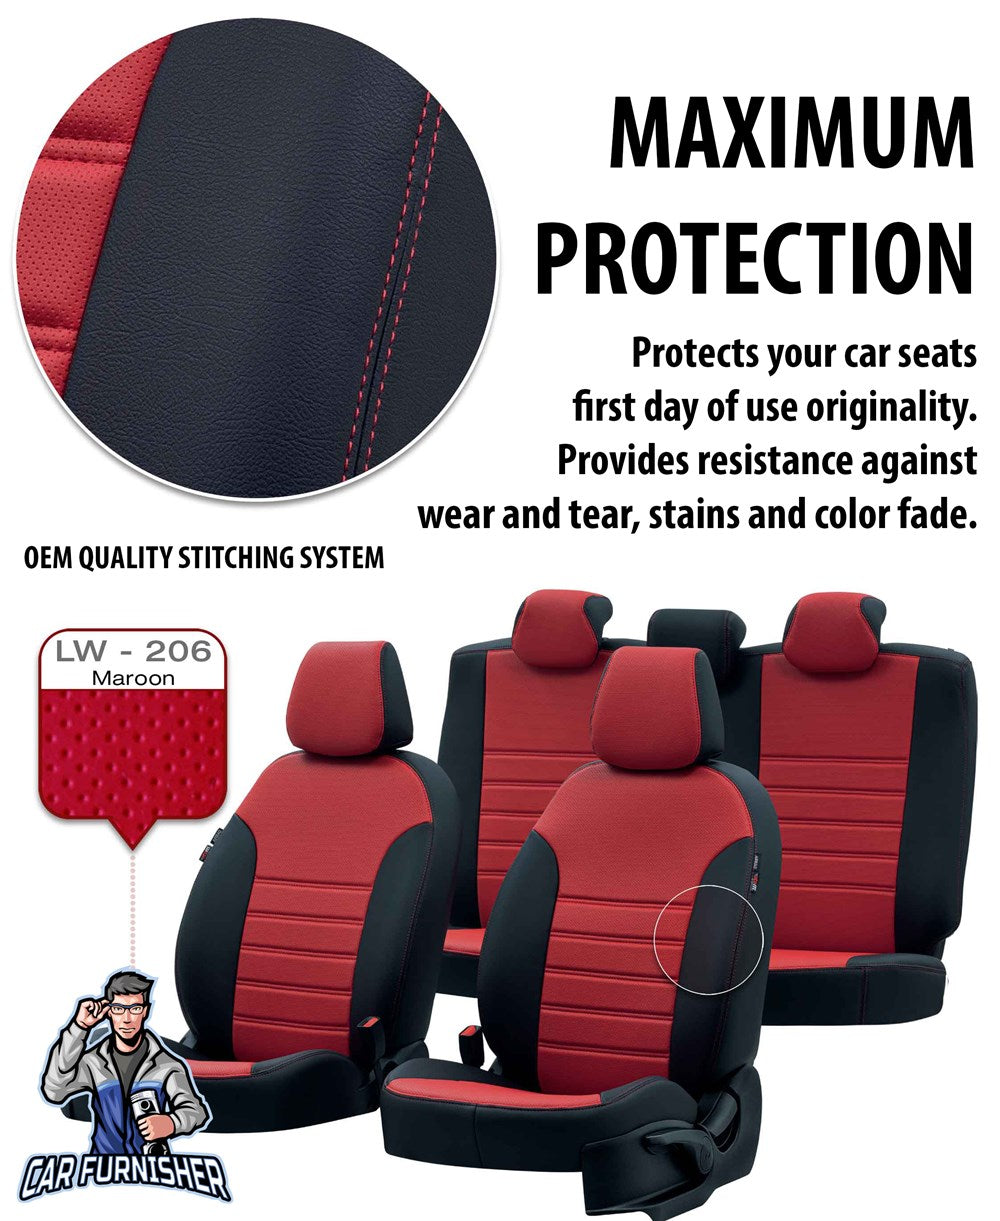 Kia Venga Seat Cover Istanbul Leather Design Smoked Black Leather